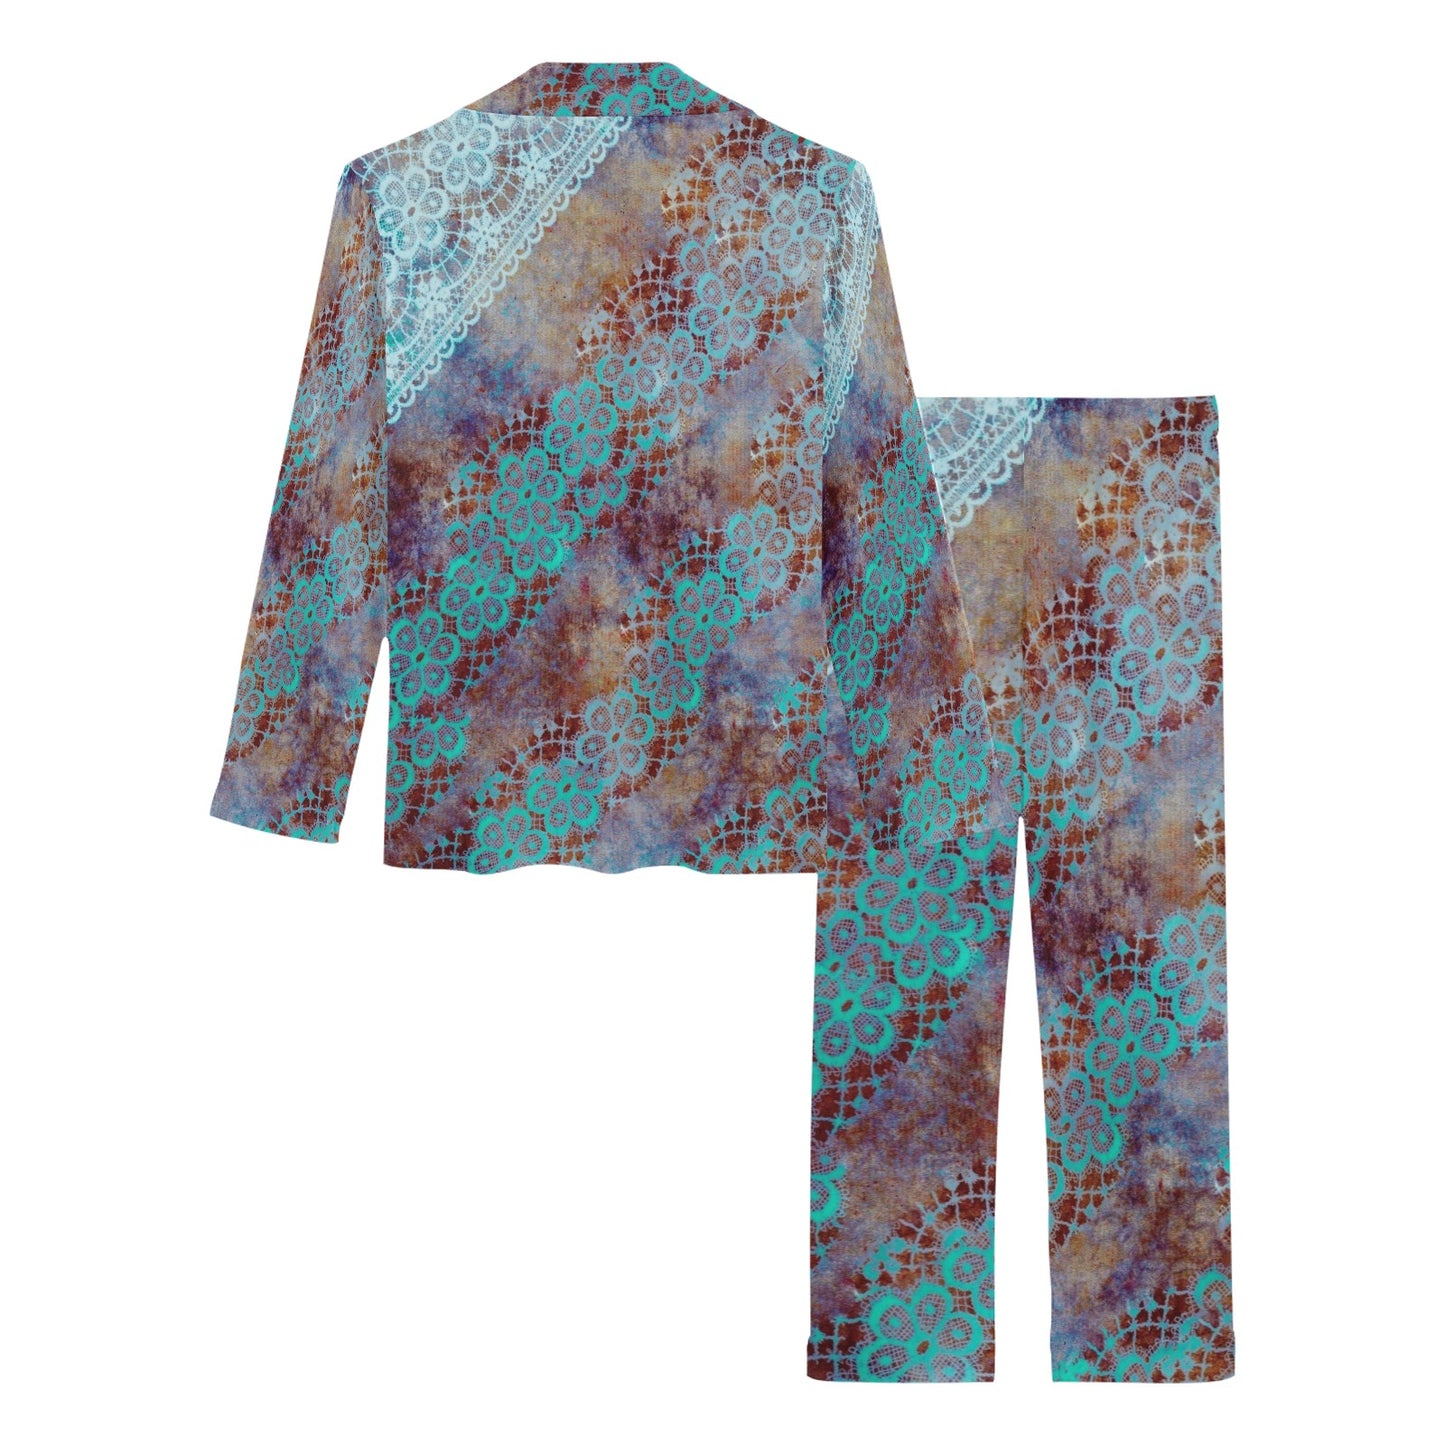 Victorian printed lace pajama set, design 37 Women's Long Pajama Set (Sets 02)